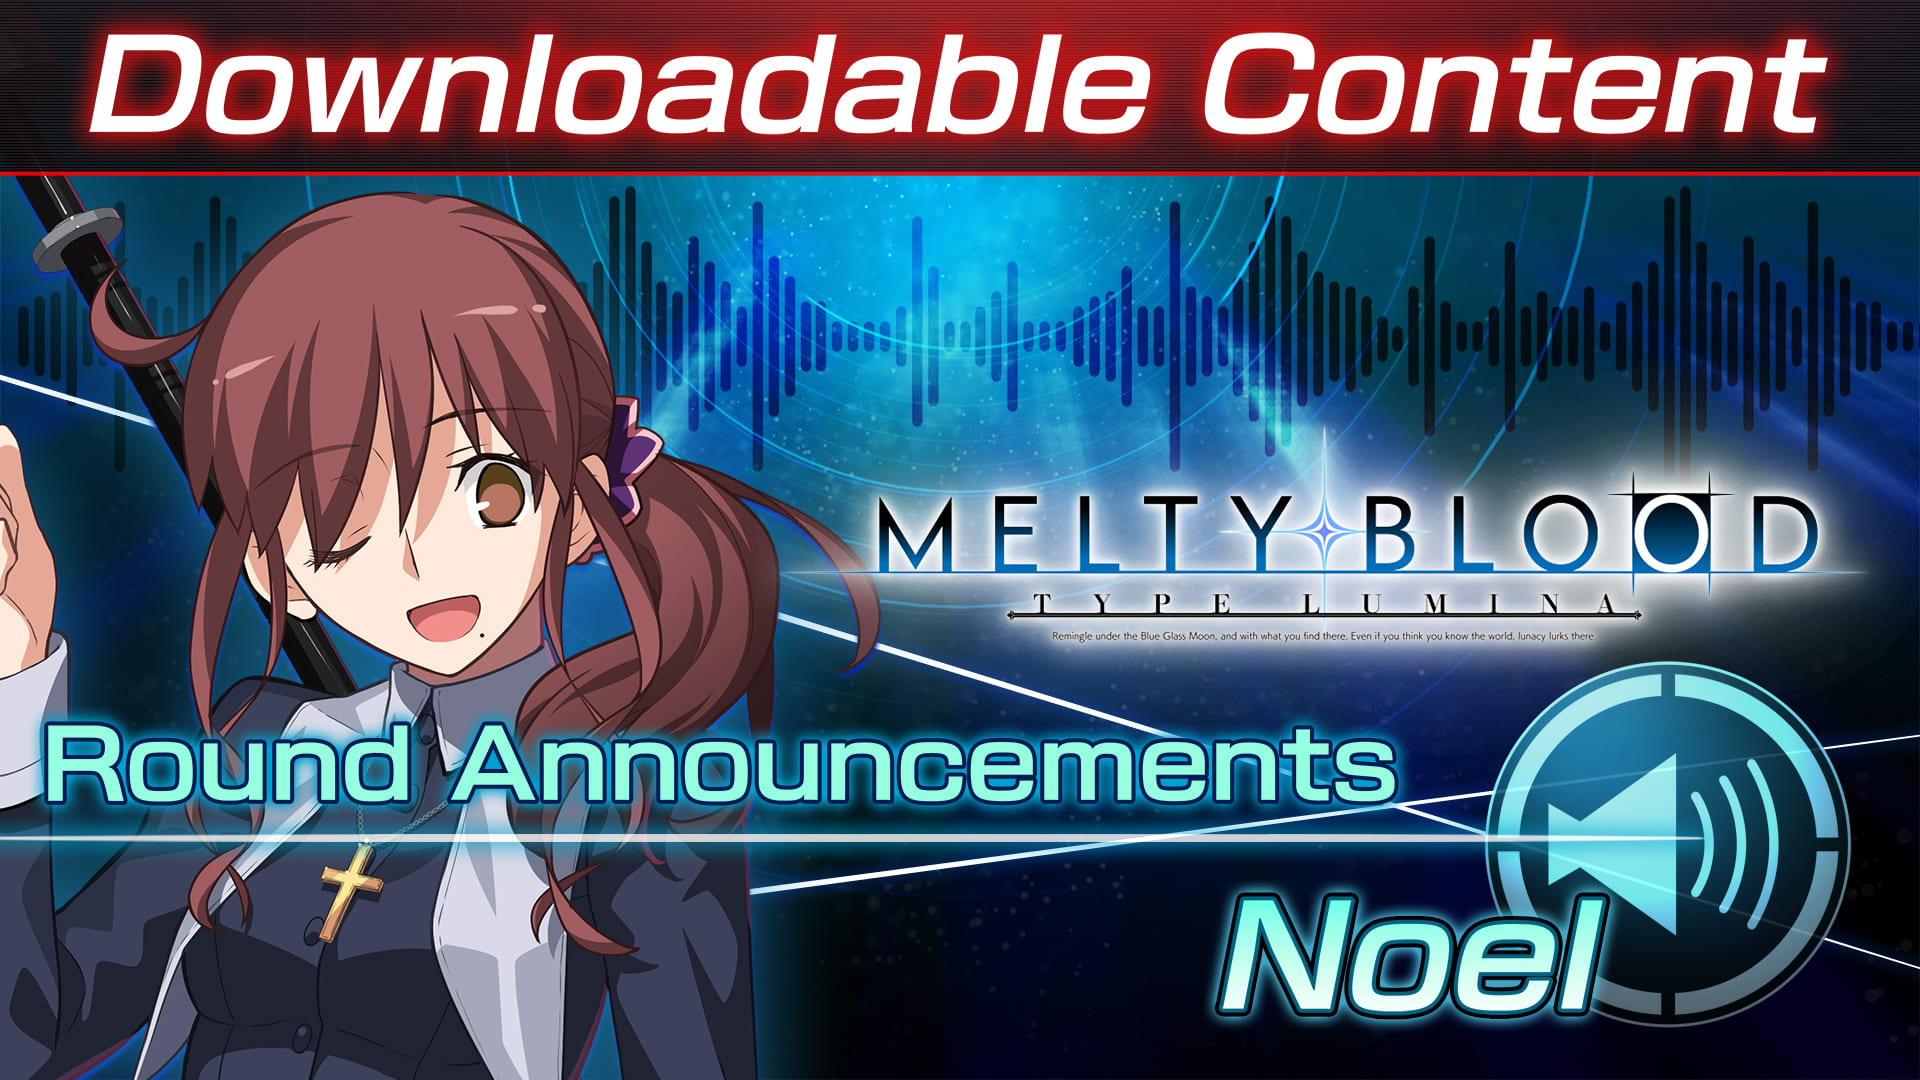 DLC: Noel Round Announcements